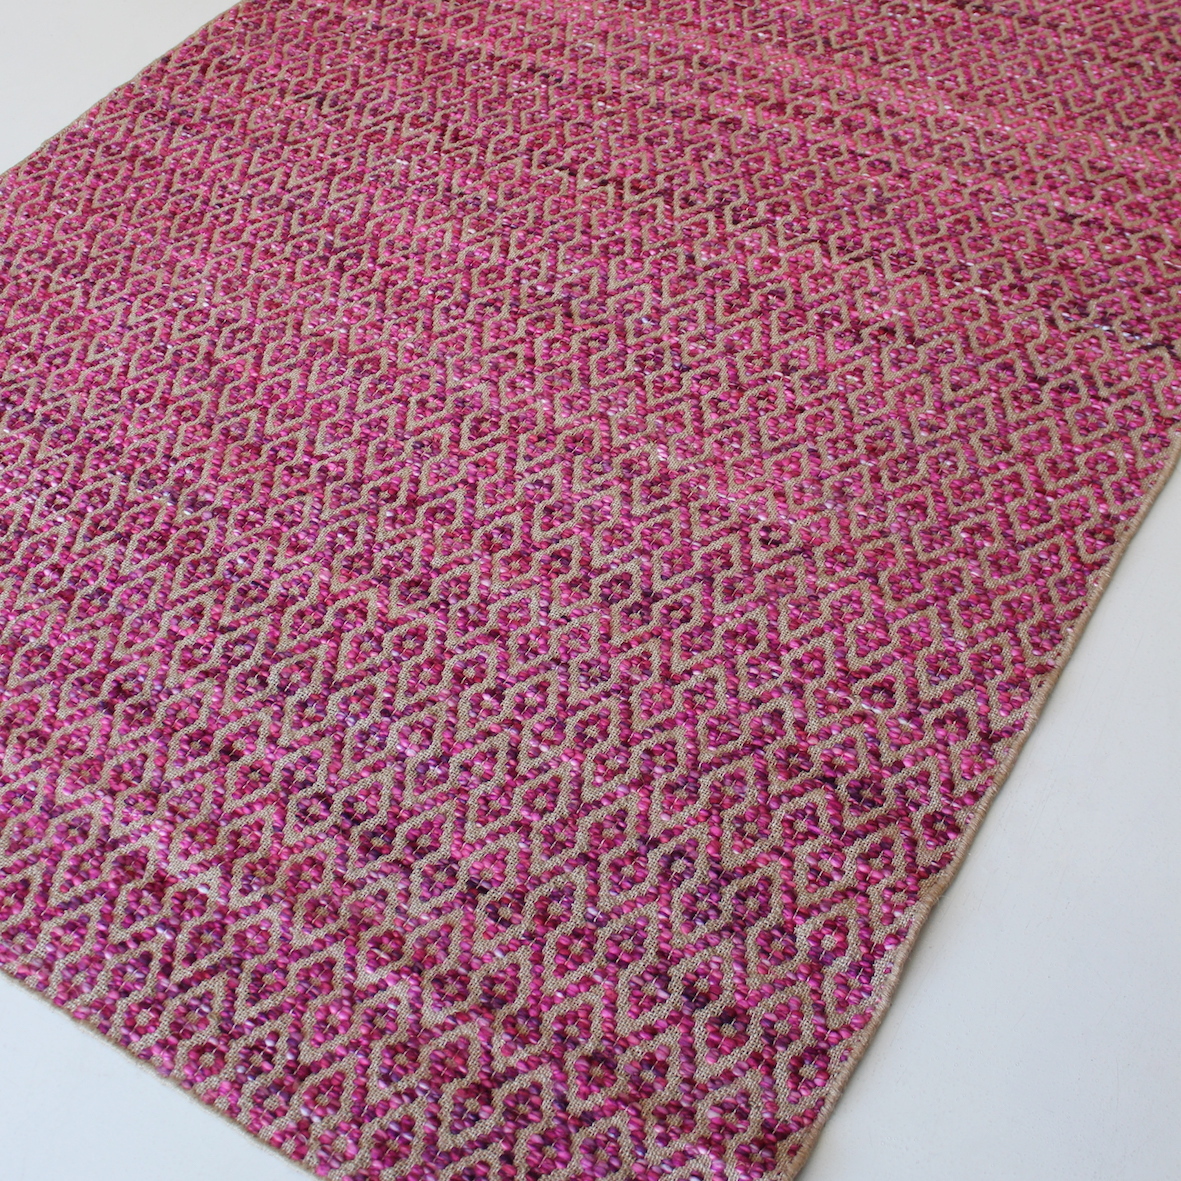 Pink texture rug